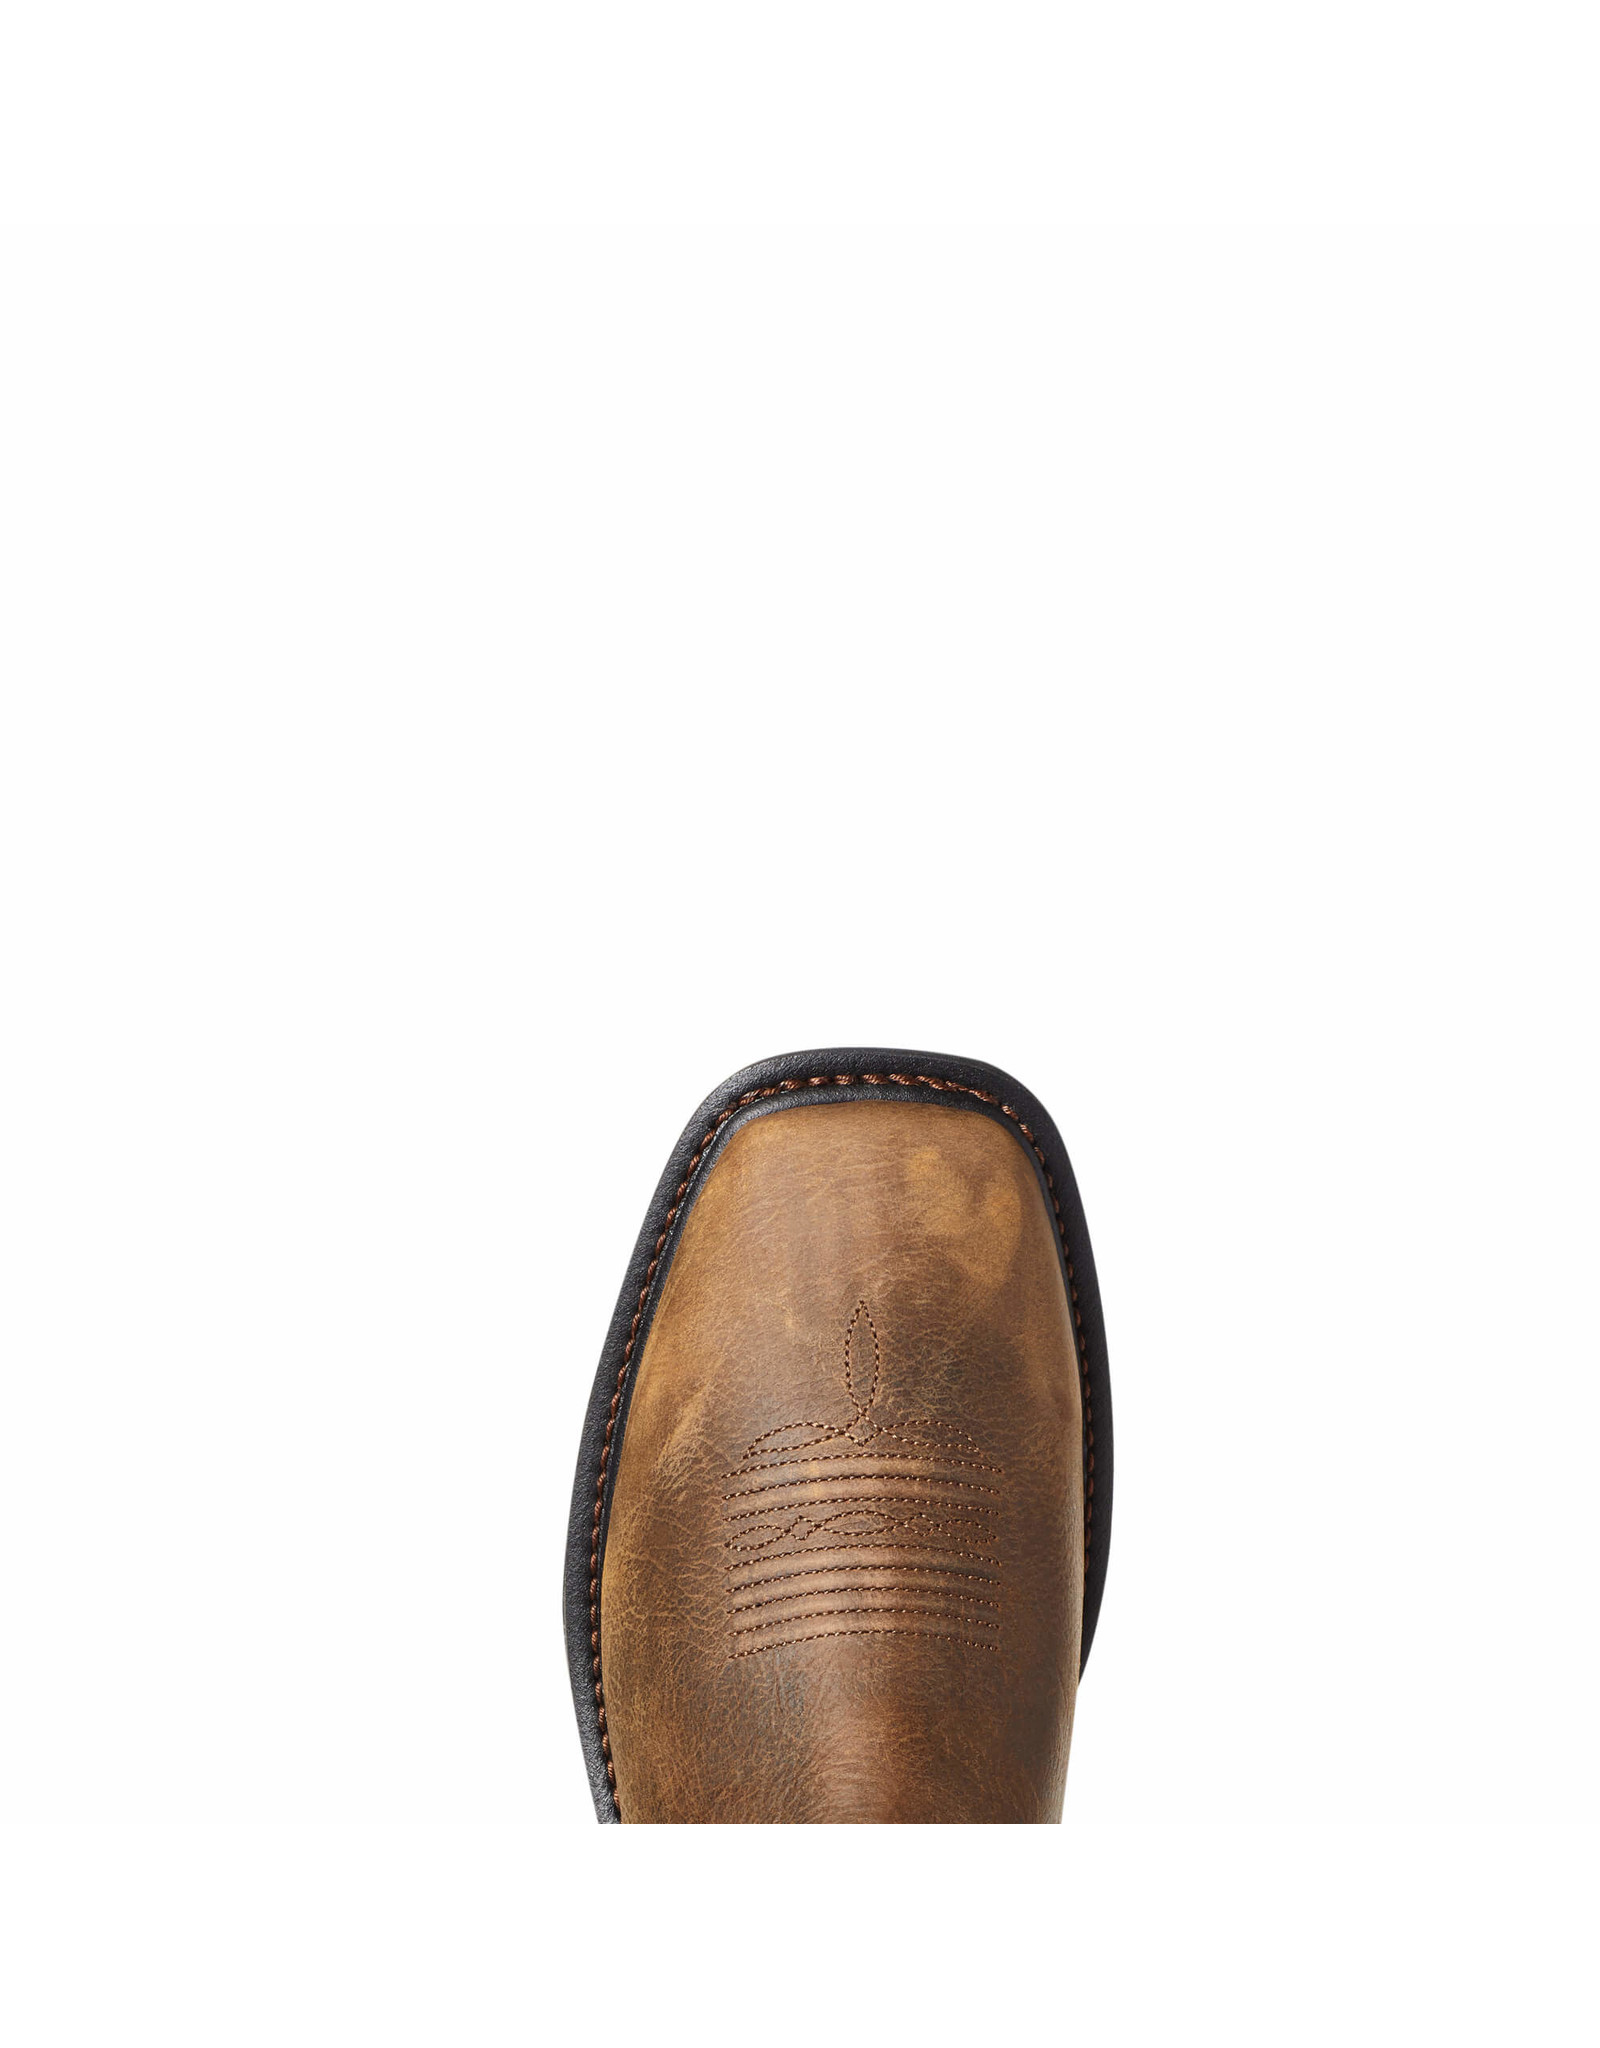 Ariat Men's Workhog XT VentTek H2O Rye Brown 10035984 Soft Toe Work Boots